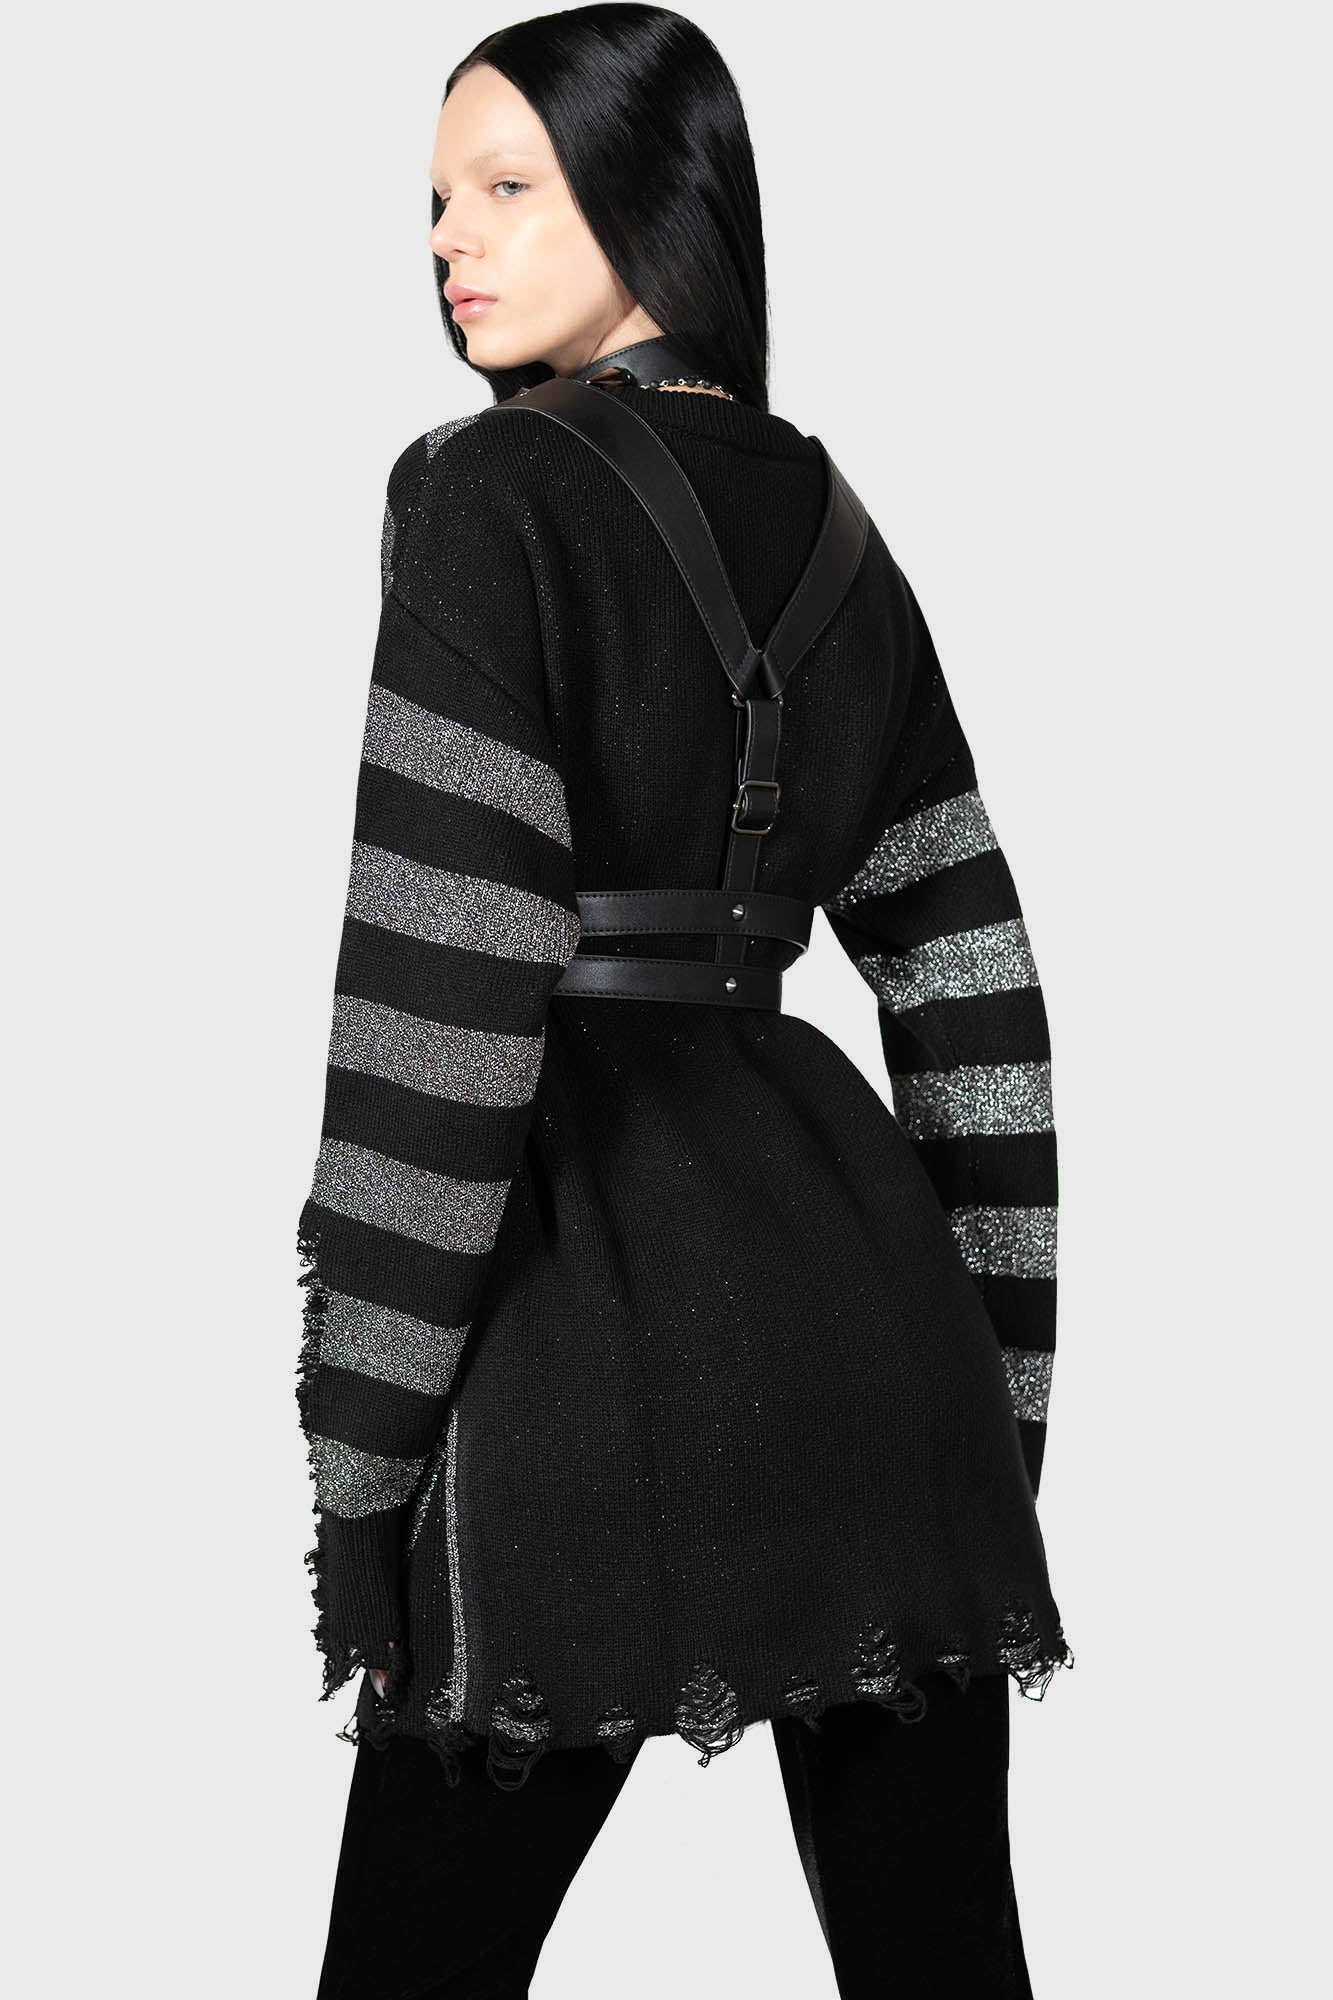 Killstar Libi Sweater in Black and Gun Metal - Kate's Clothing